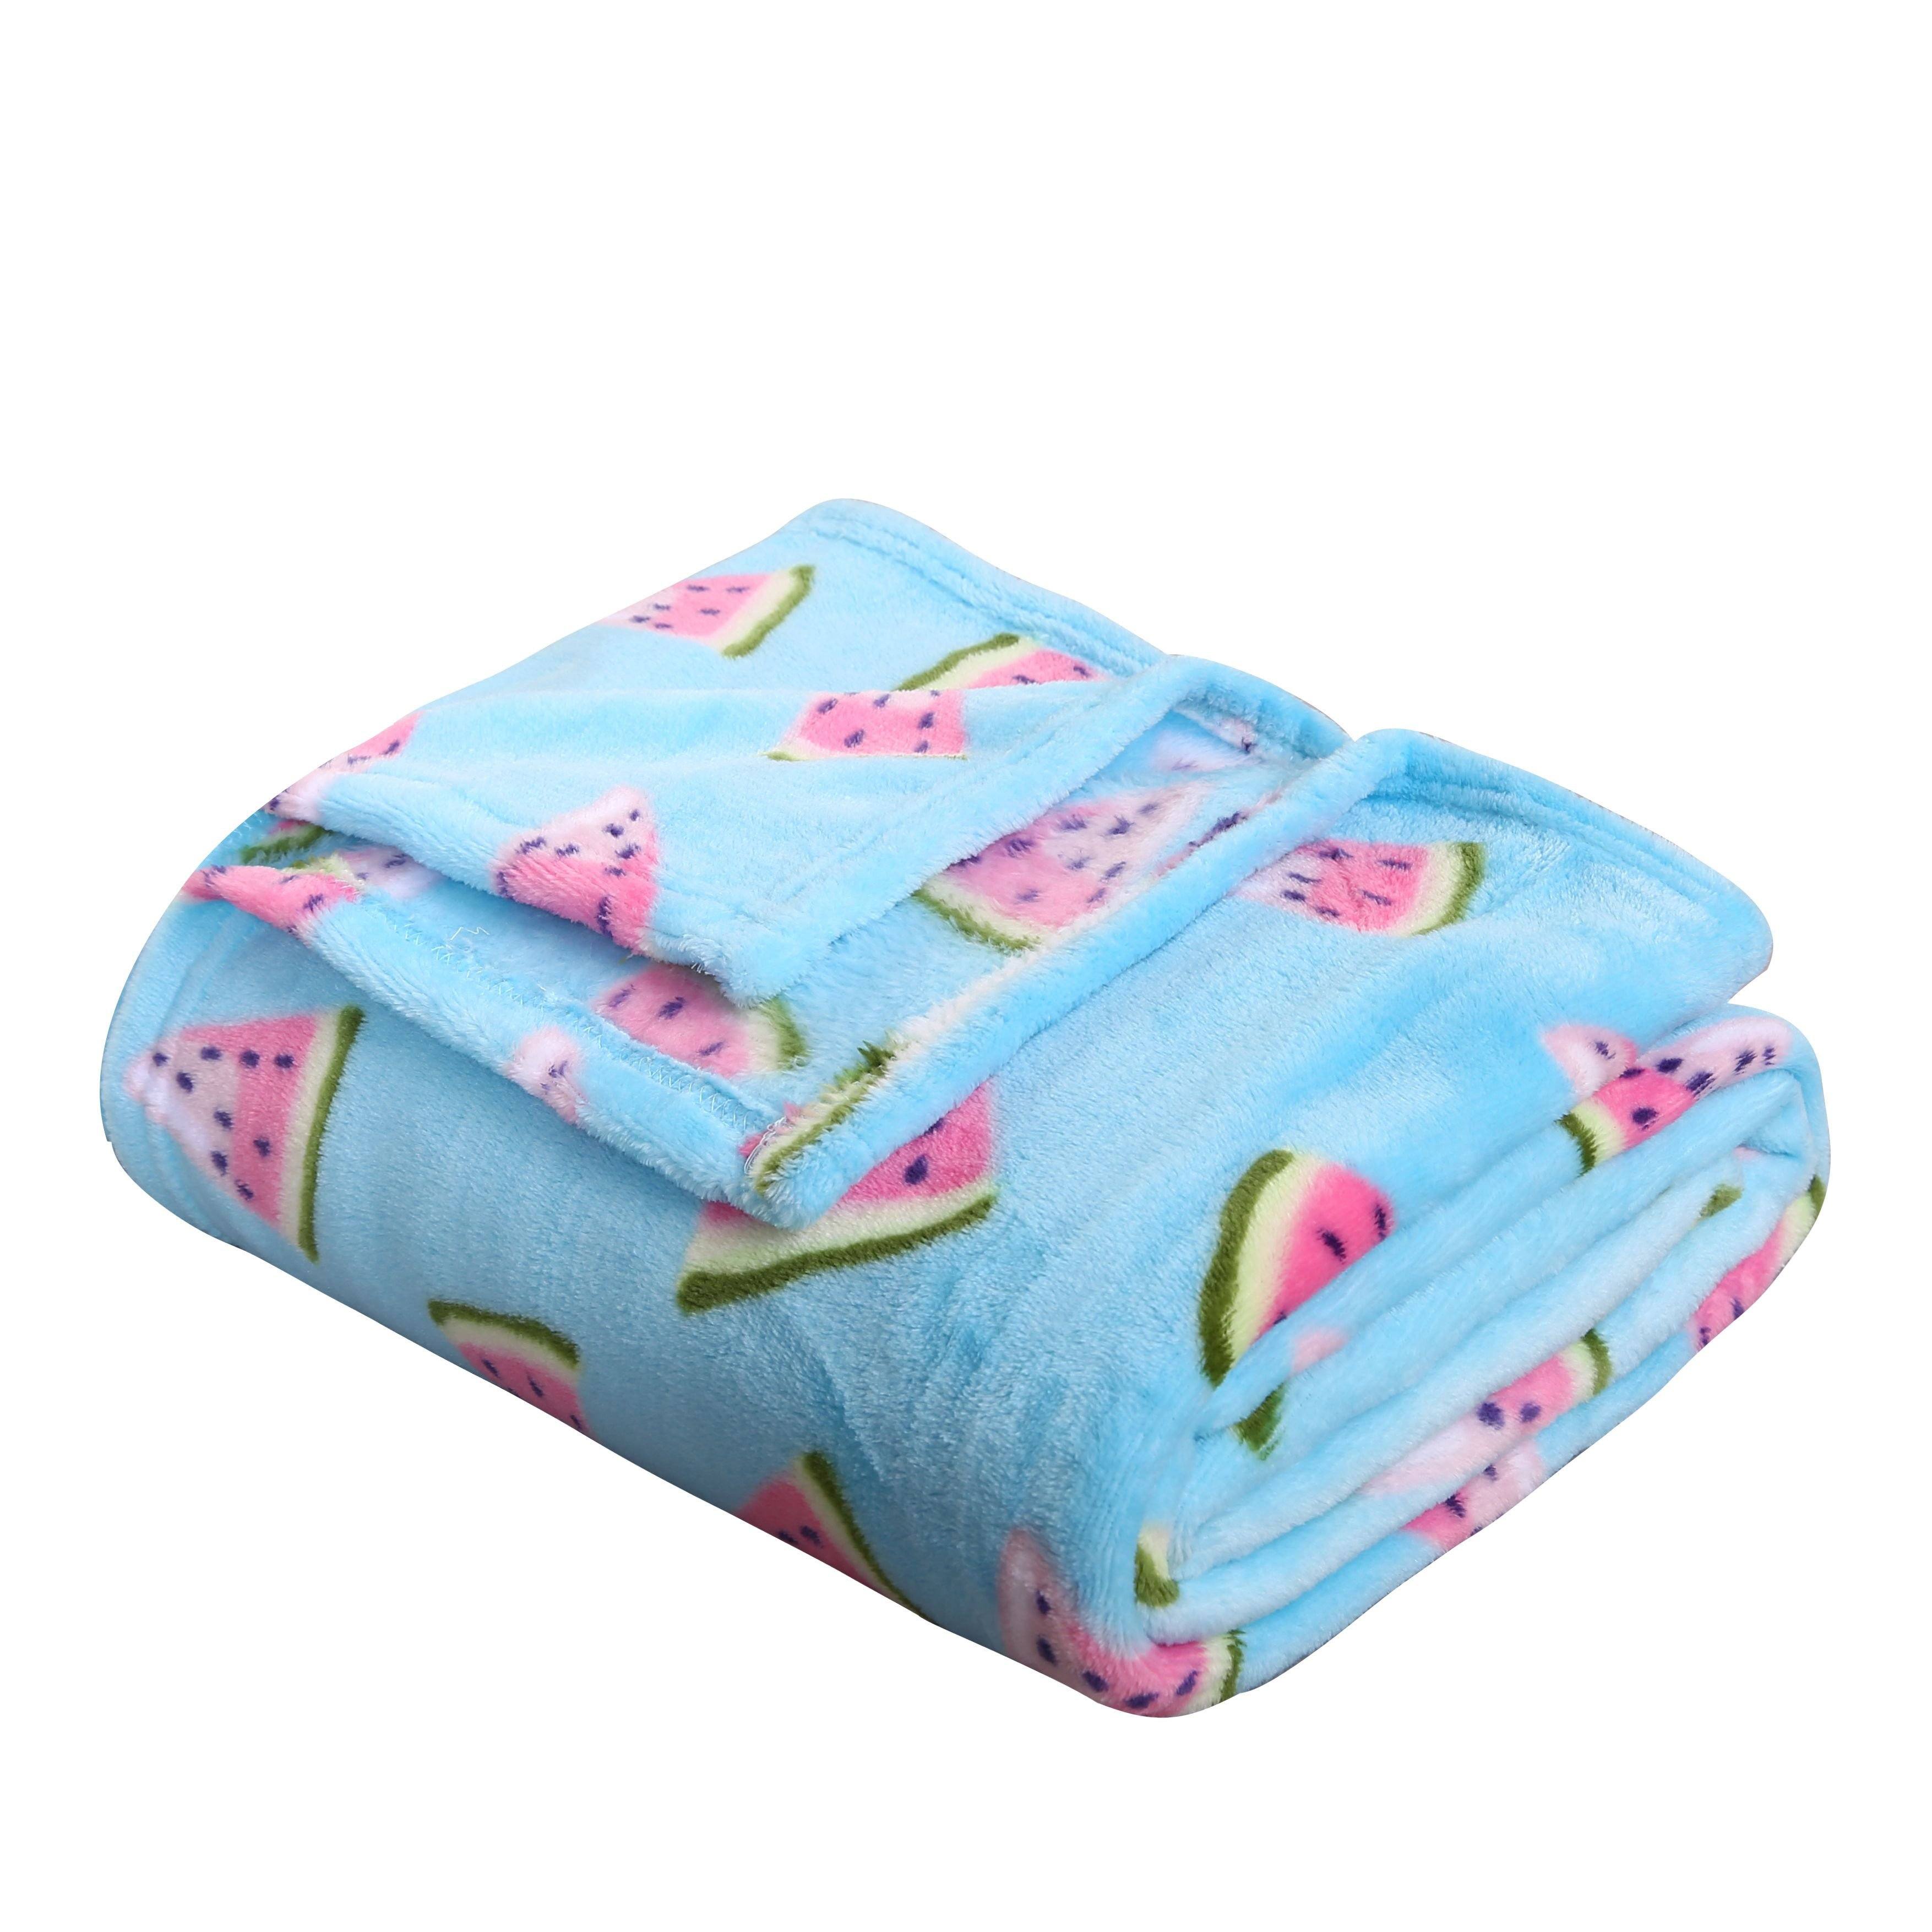 Super Soft Blanket - Assorted Styles / Watermelon